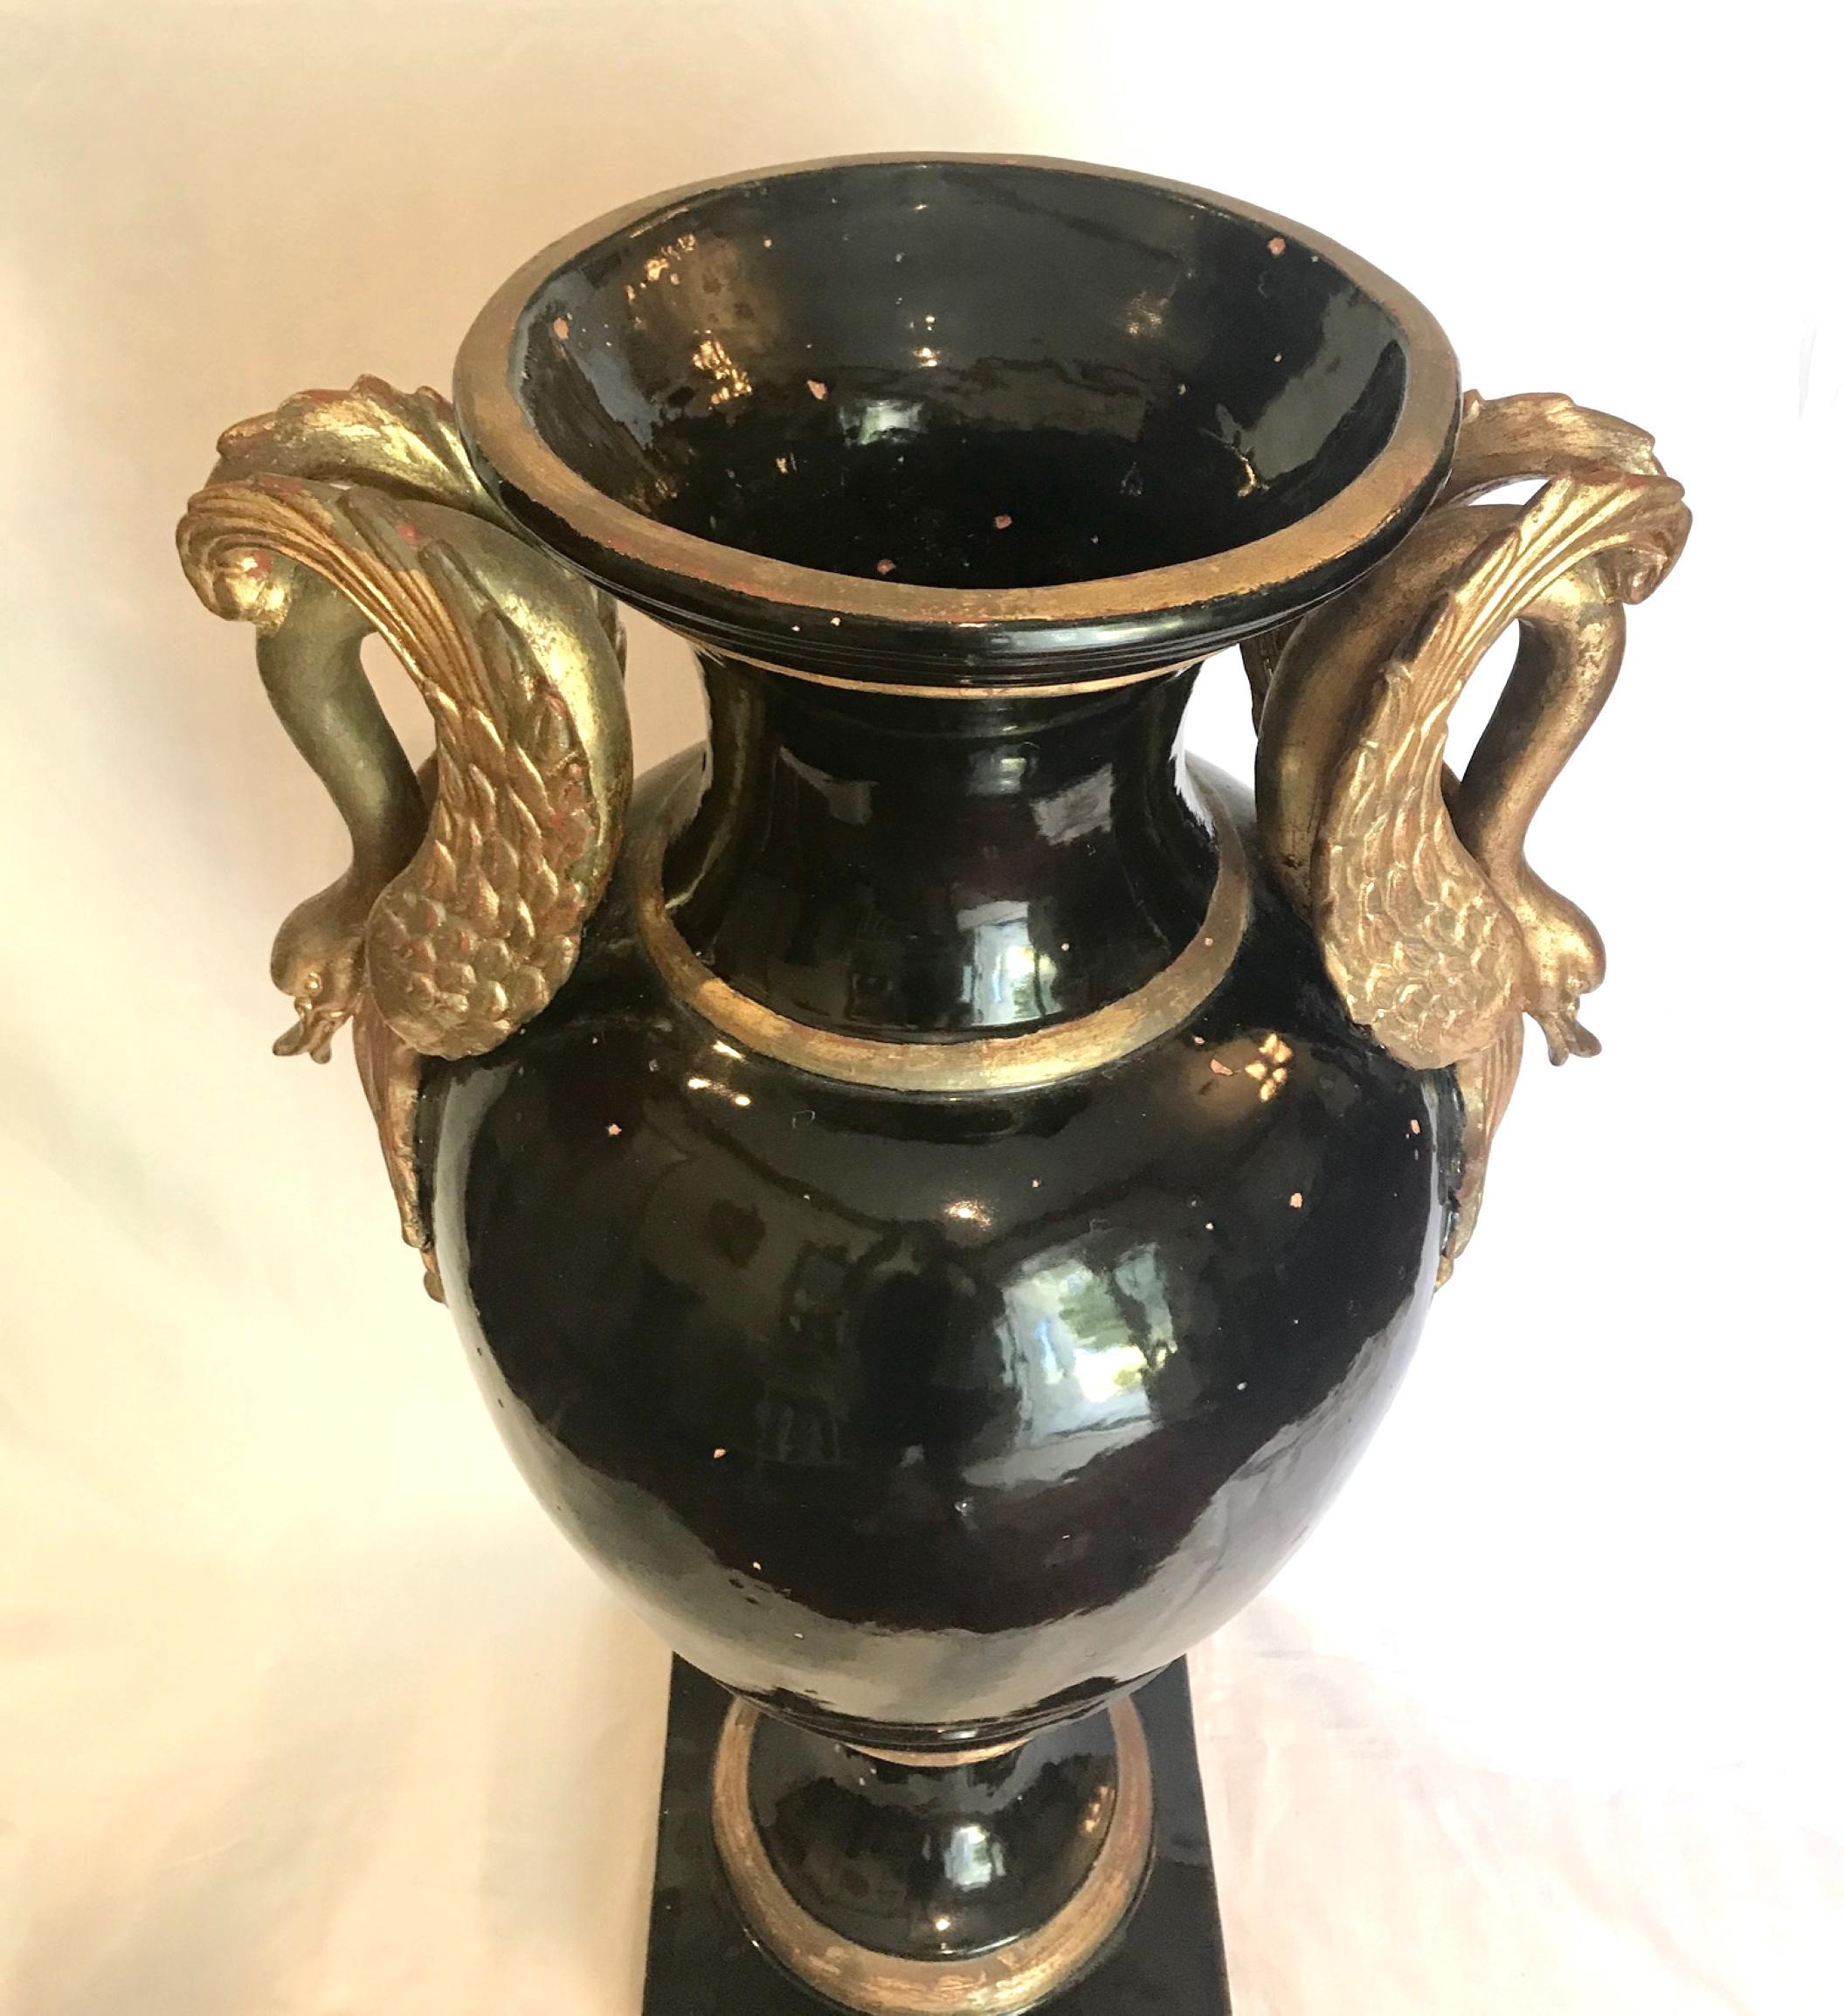 19th Century French Monumental Terracotta Cobalt Blue Glazed Vase-Urn In Good Condition For Sale In Vero Beach, FL